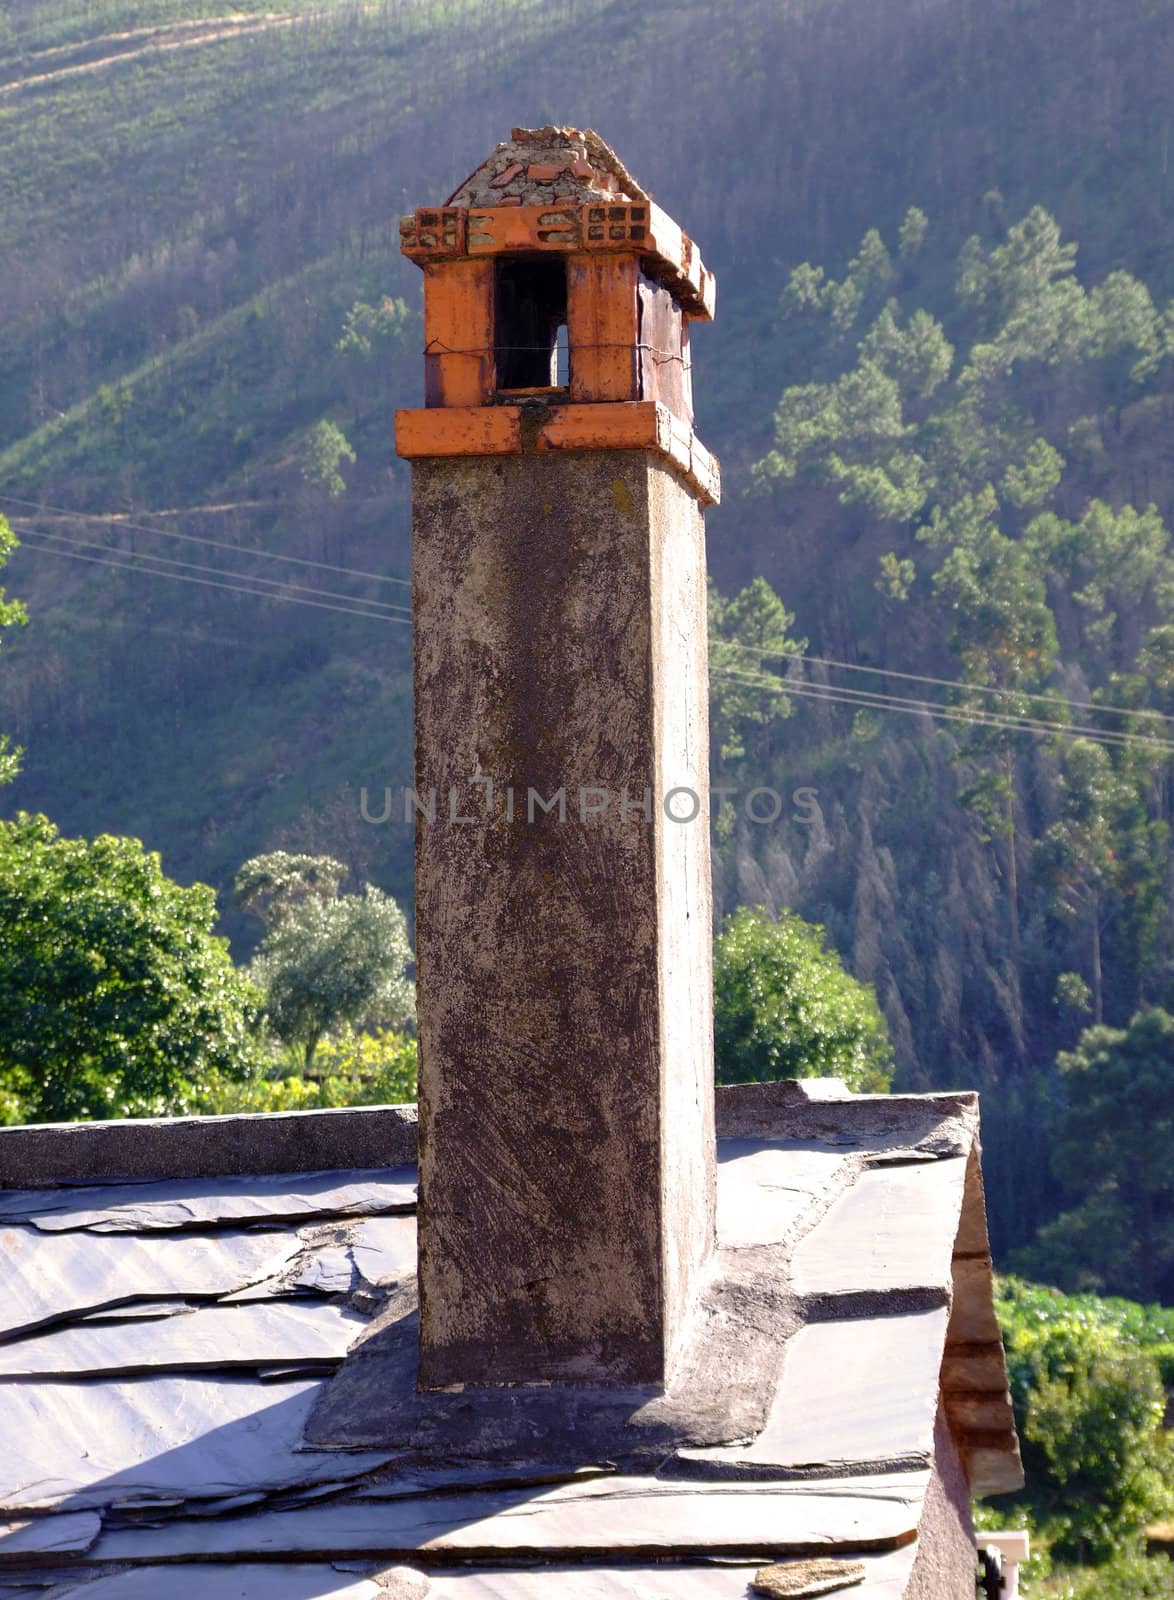 Old rustic chimney by PauloResende